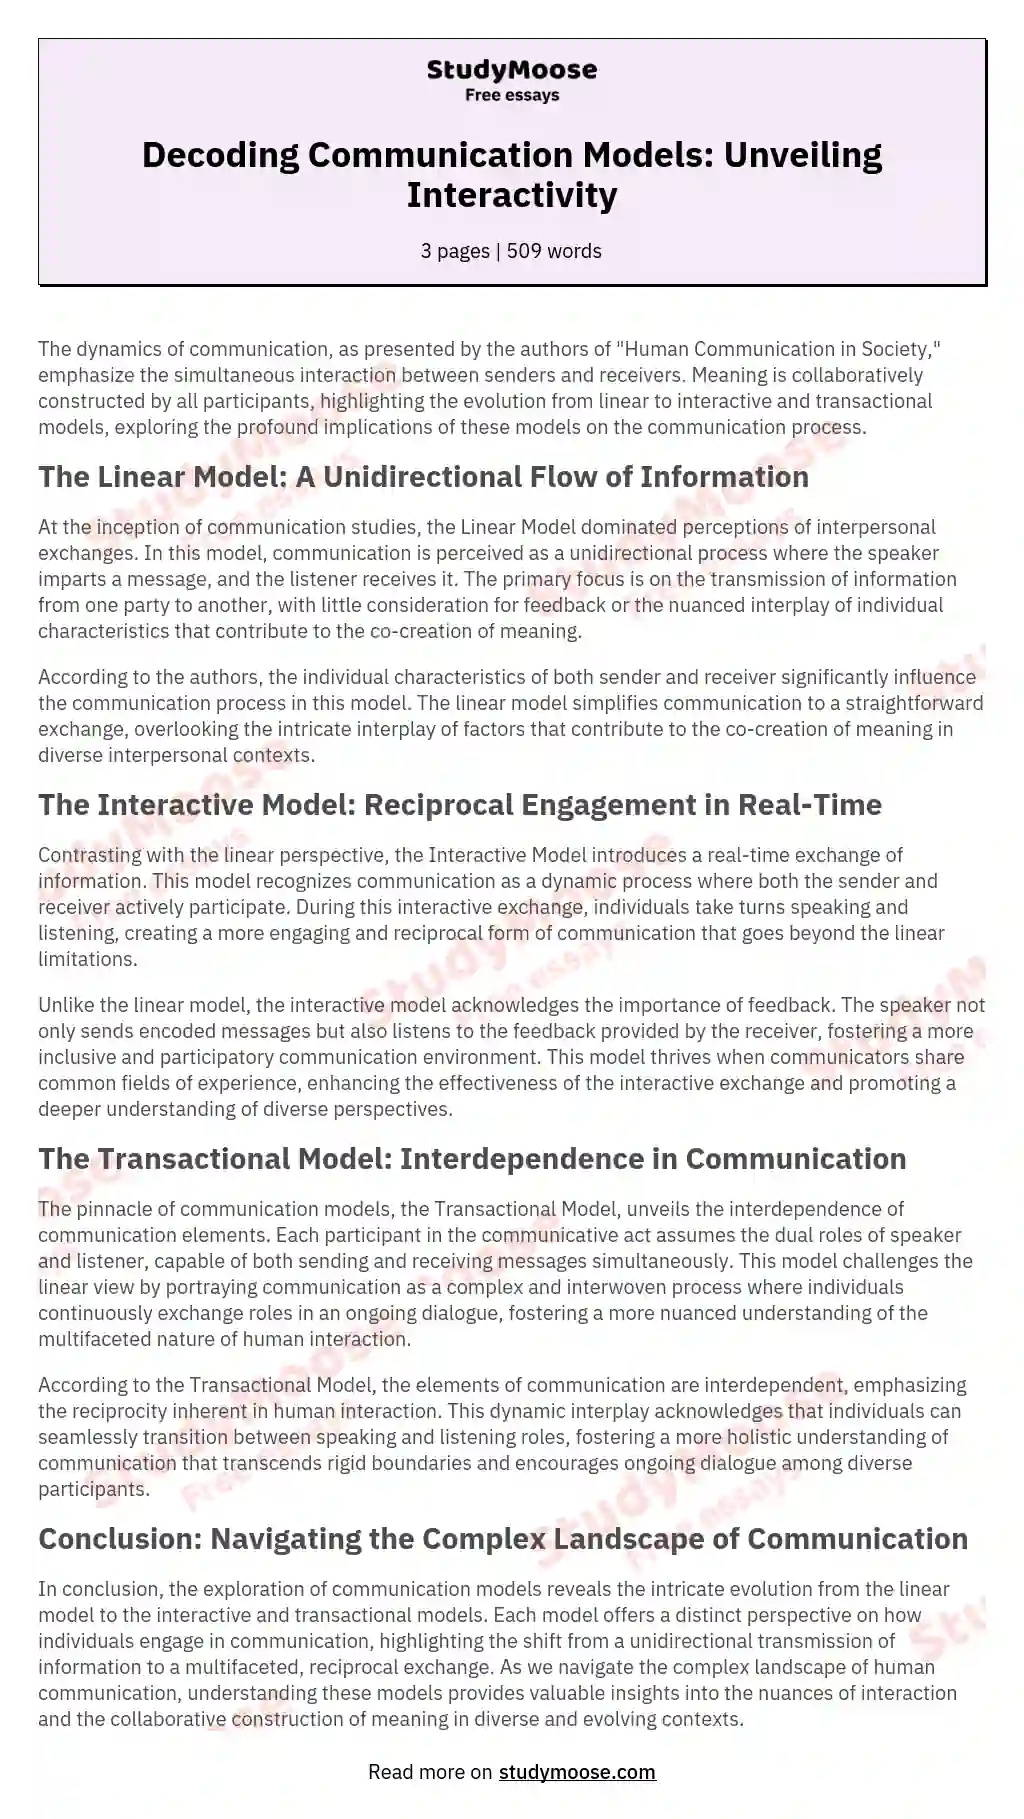 Decoding Communication Models: Unveiling Interactivity essay